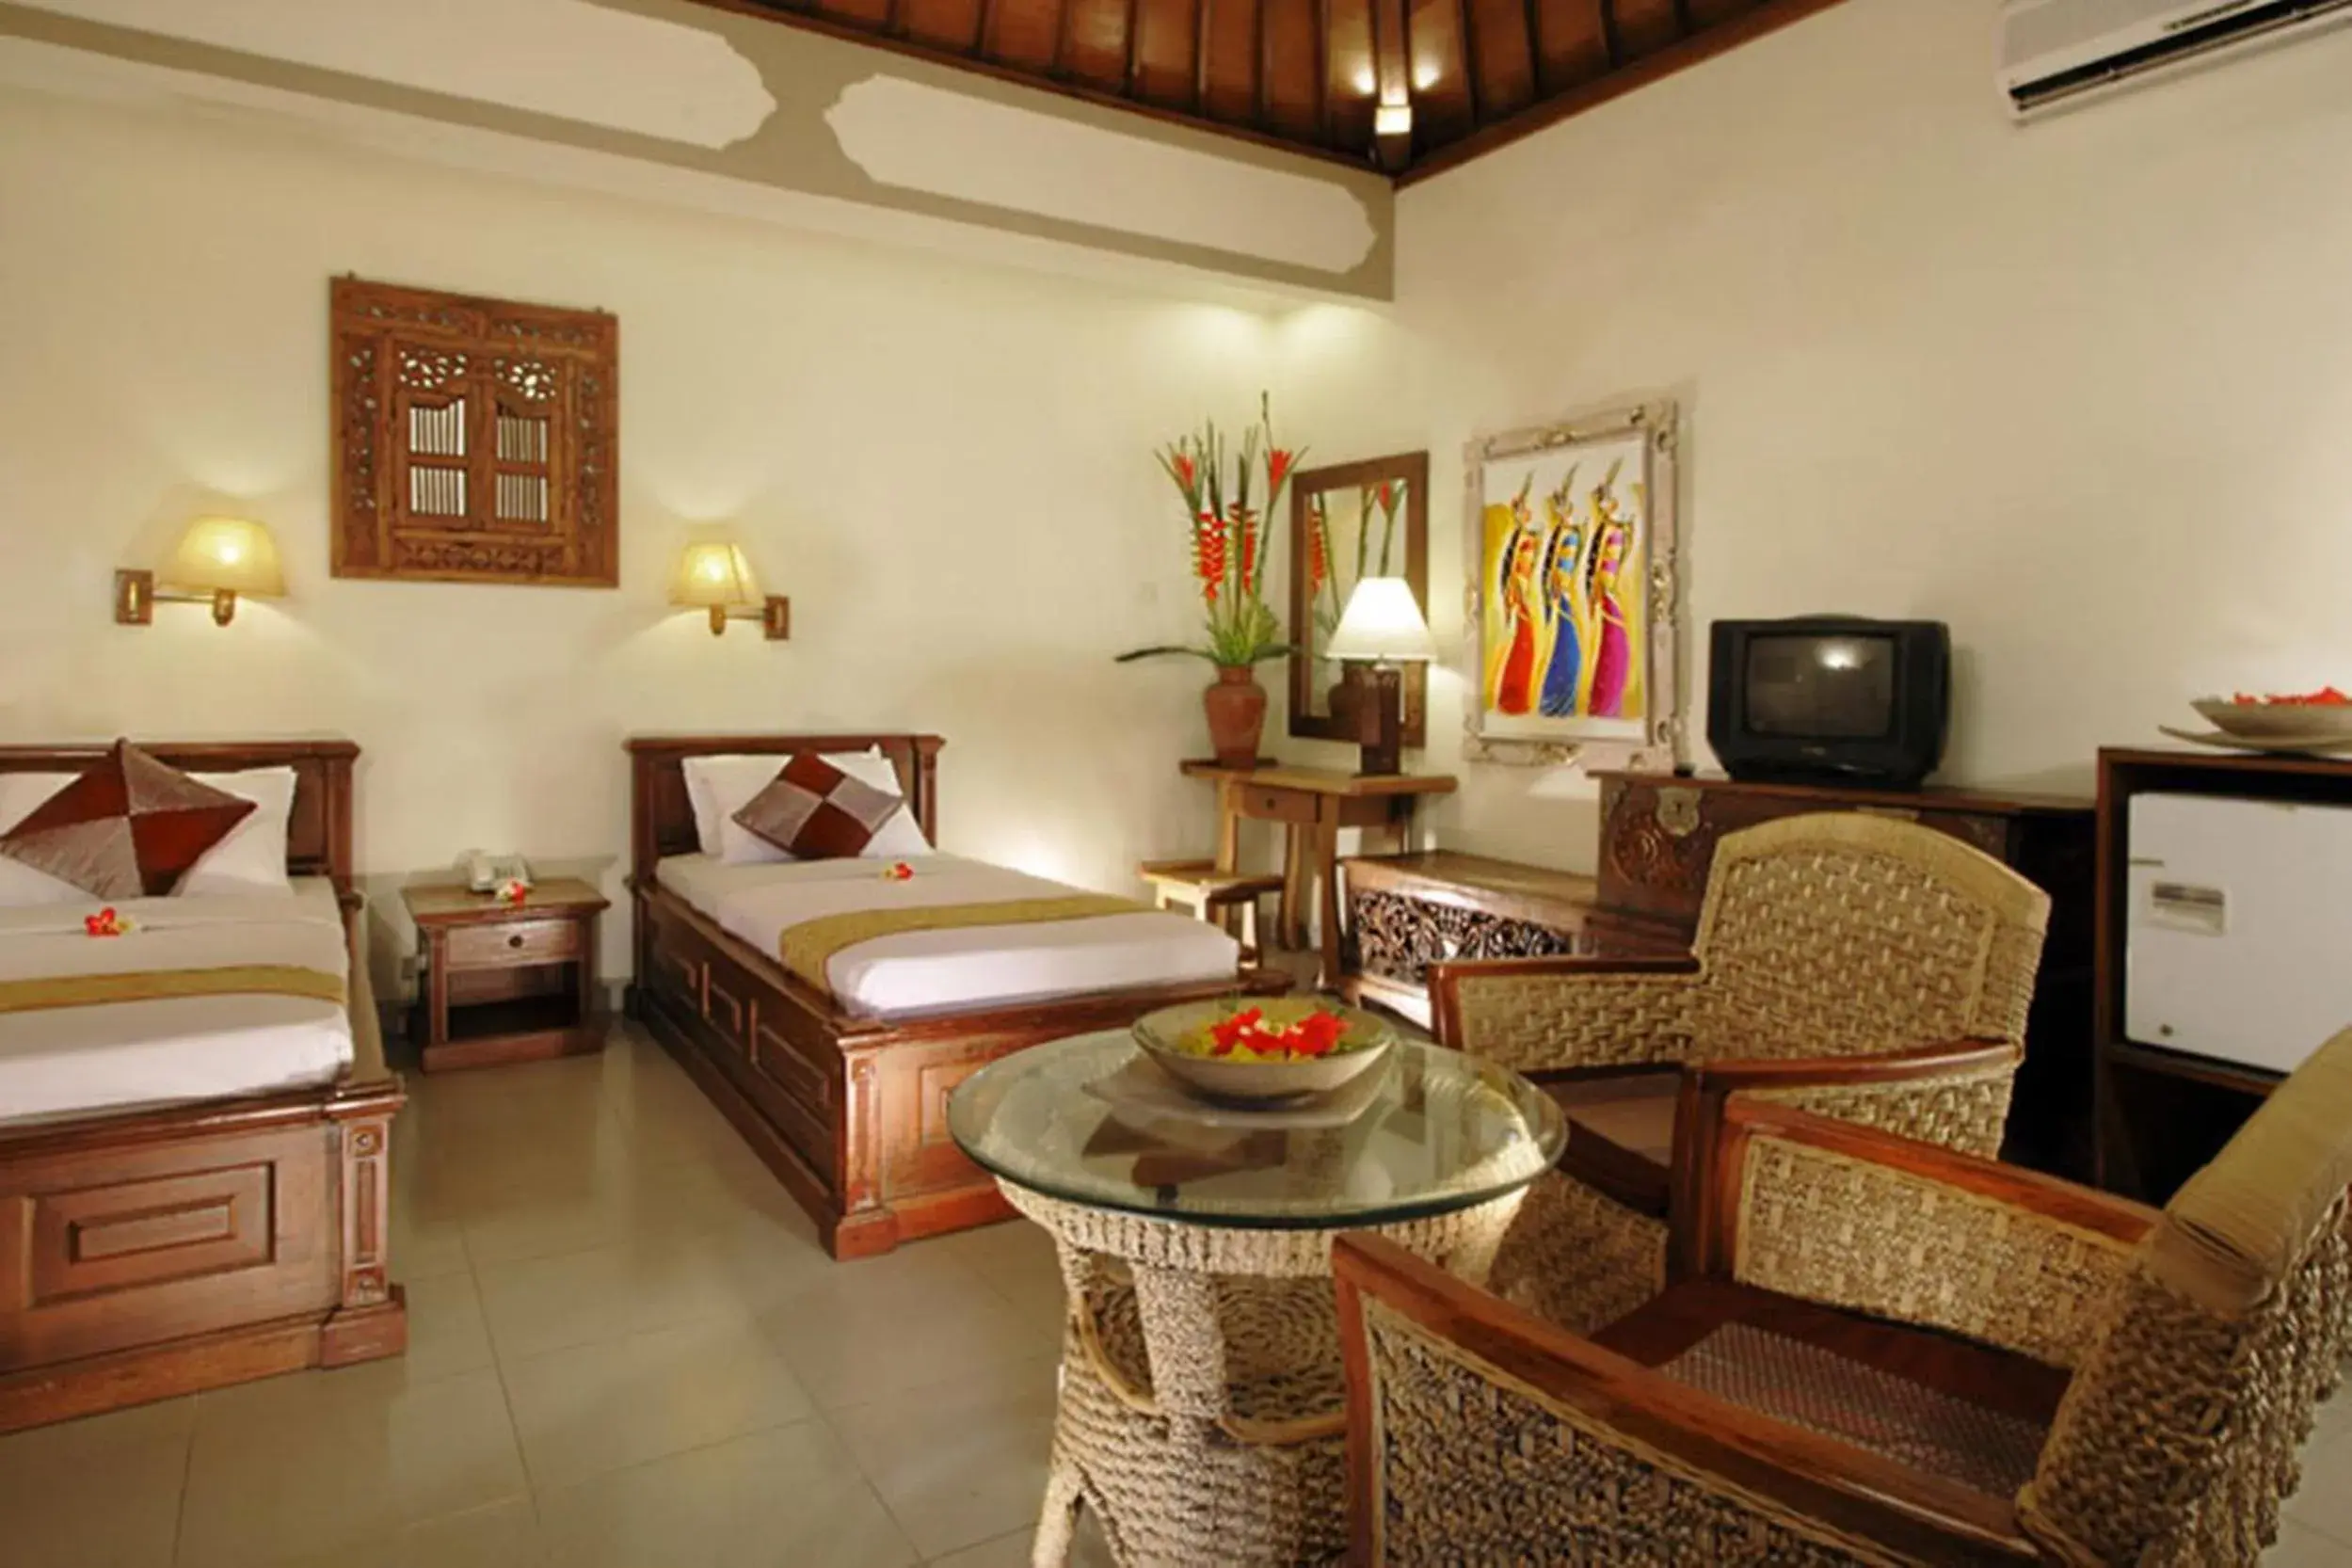 Bedroom in Restu Bali Hotel